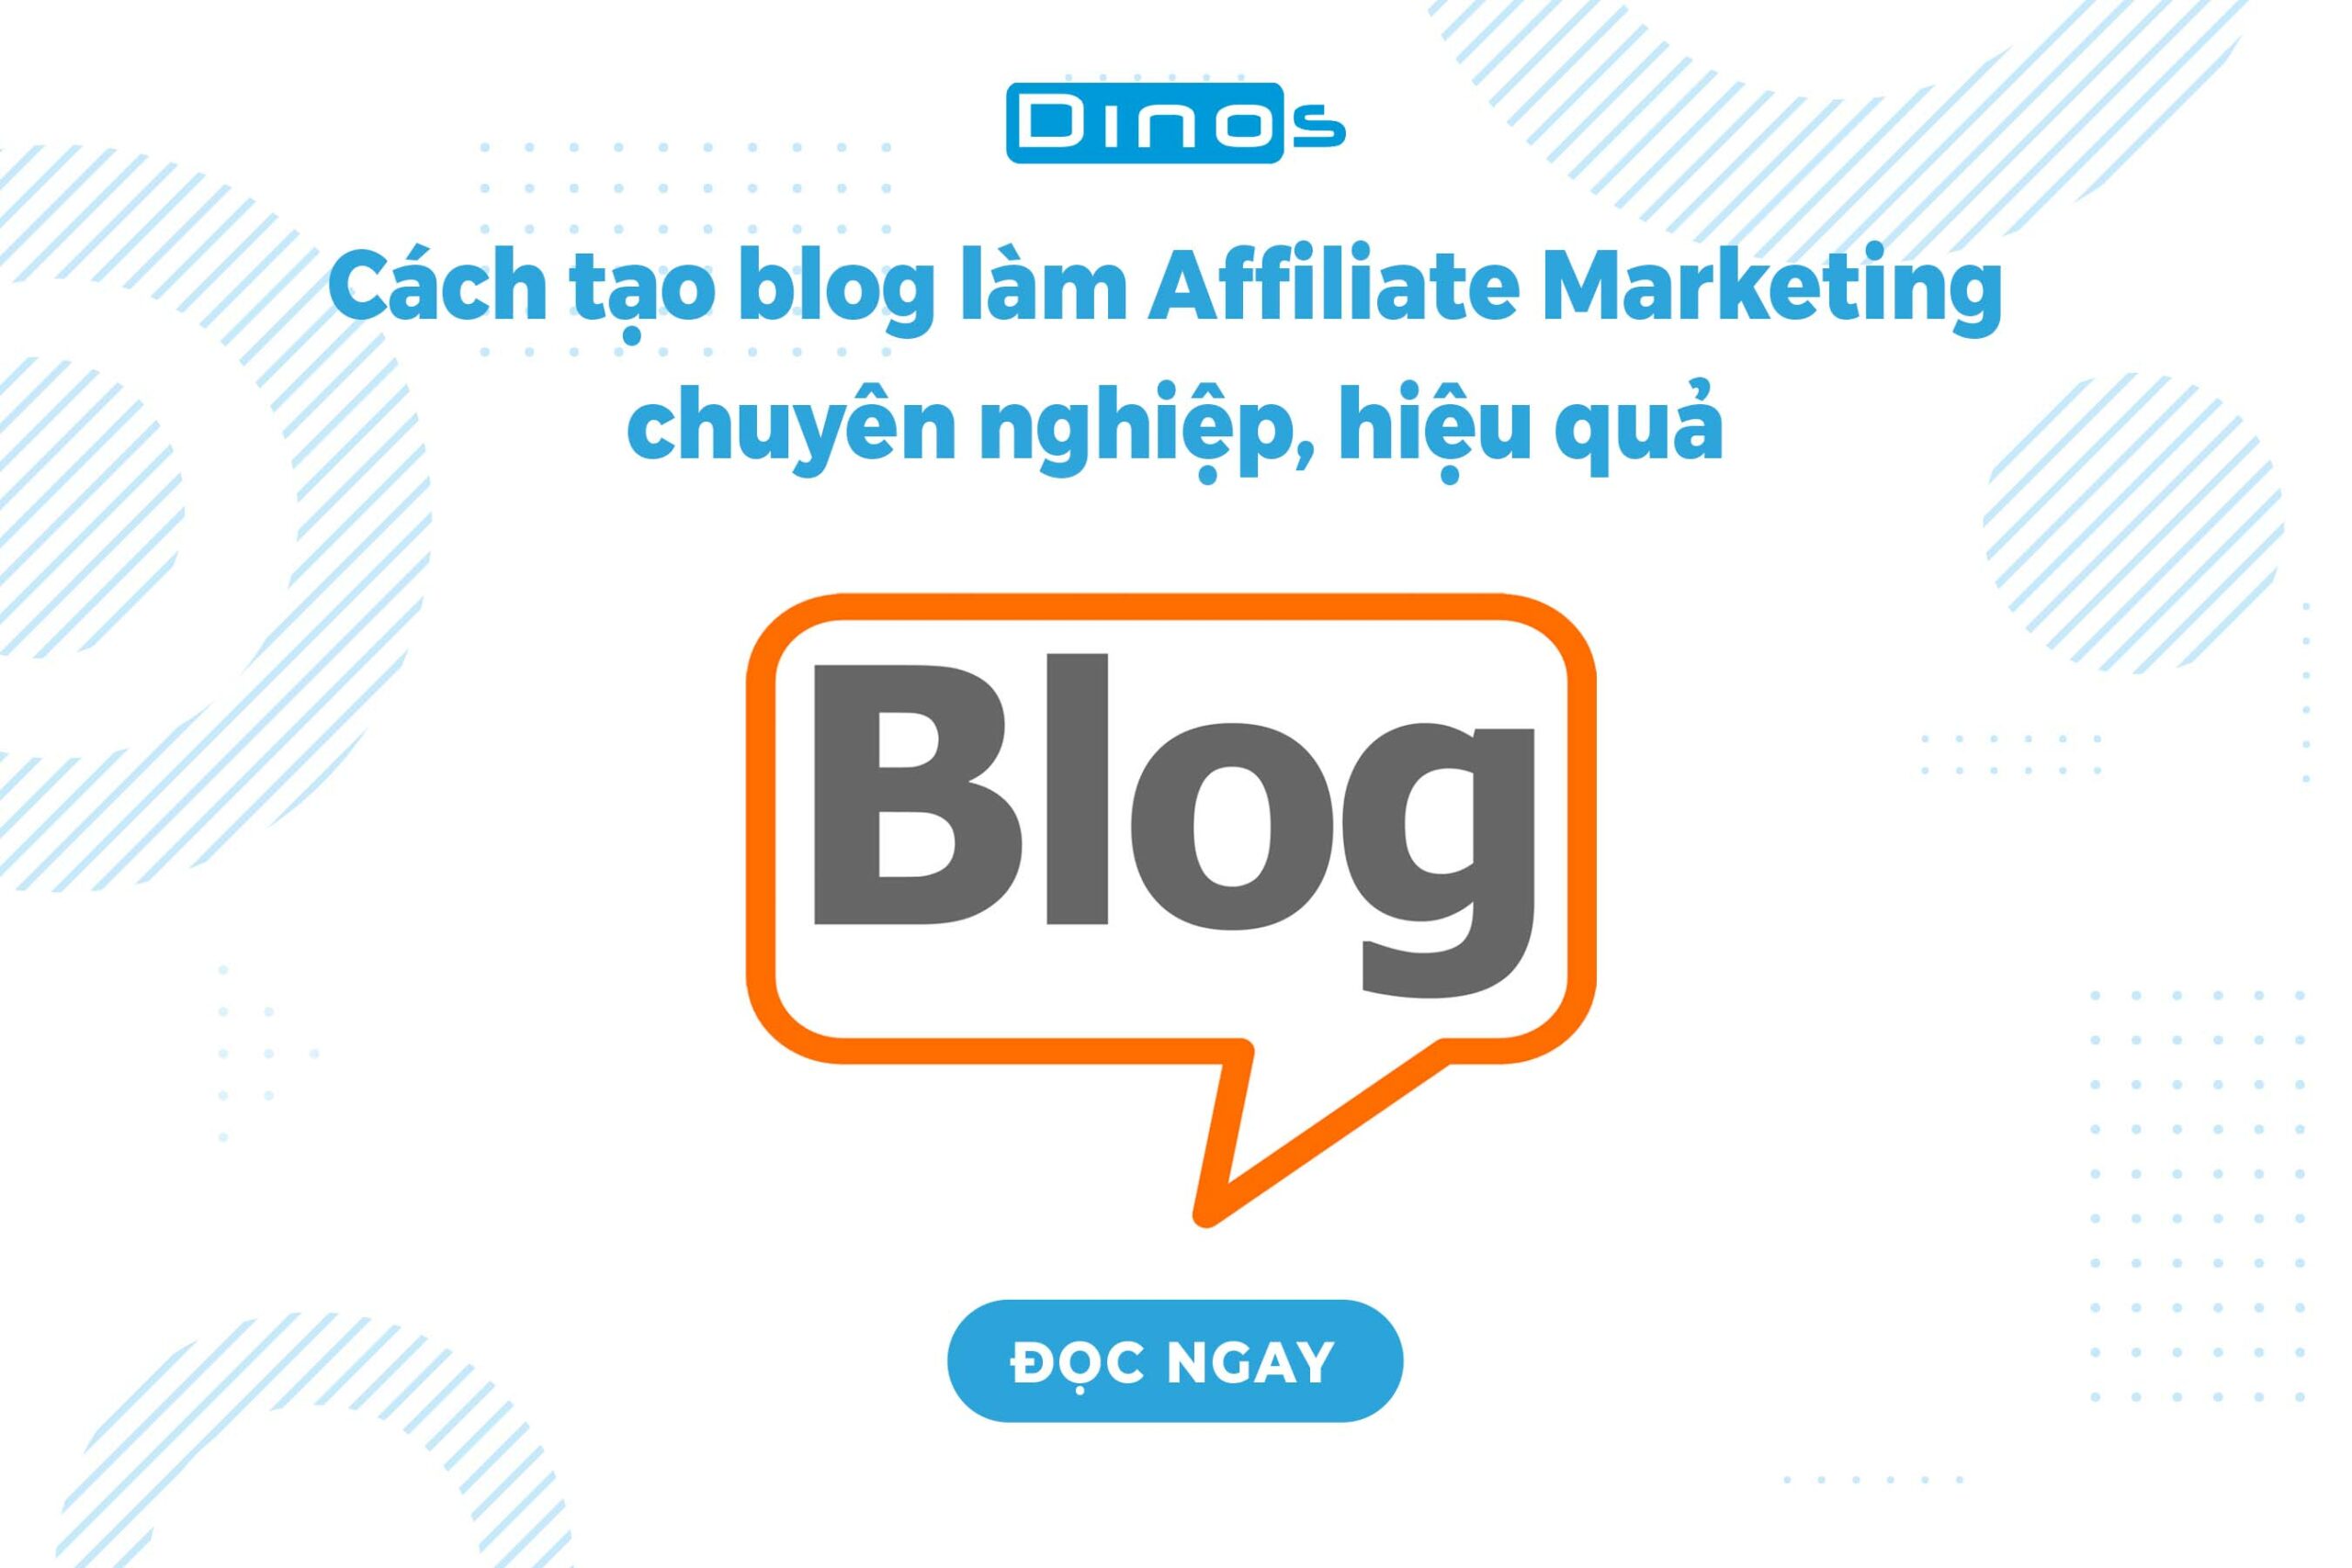 Blog Affiliate Marketing, Blog Tiếp Thị Nội Dung